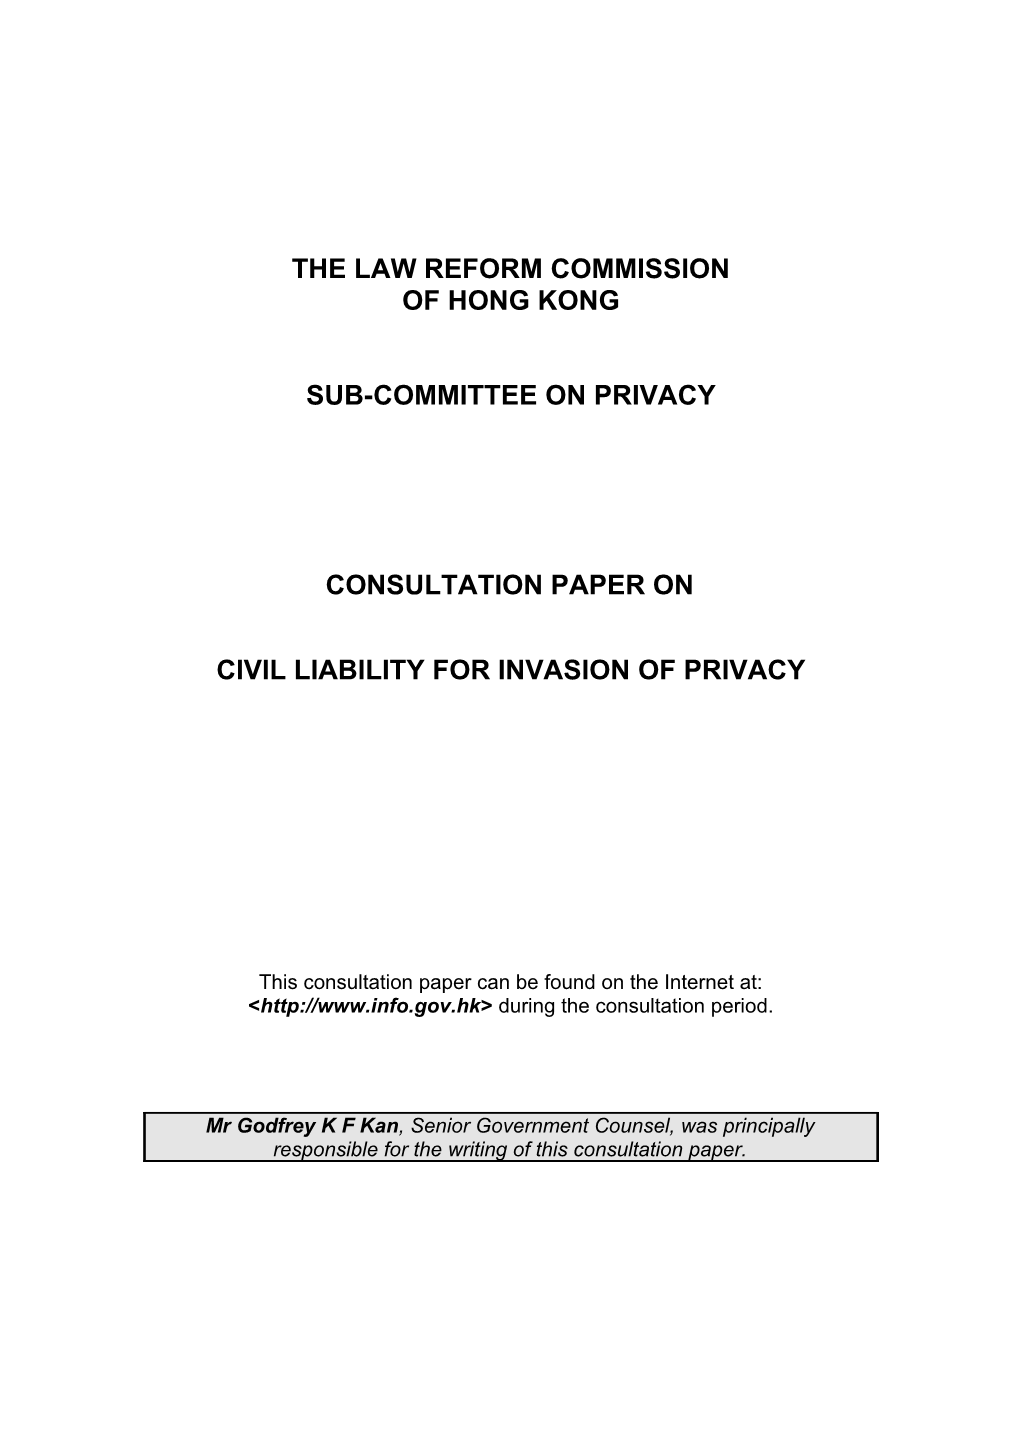 Civil Liability For Invasion Of Privacy